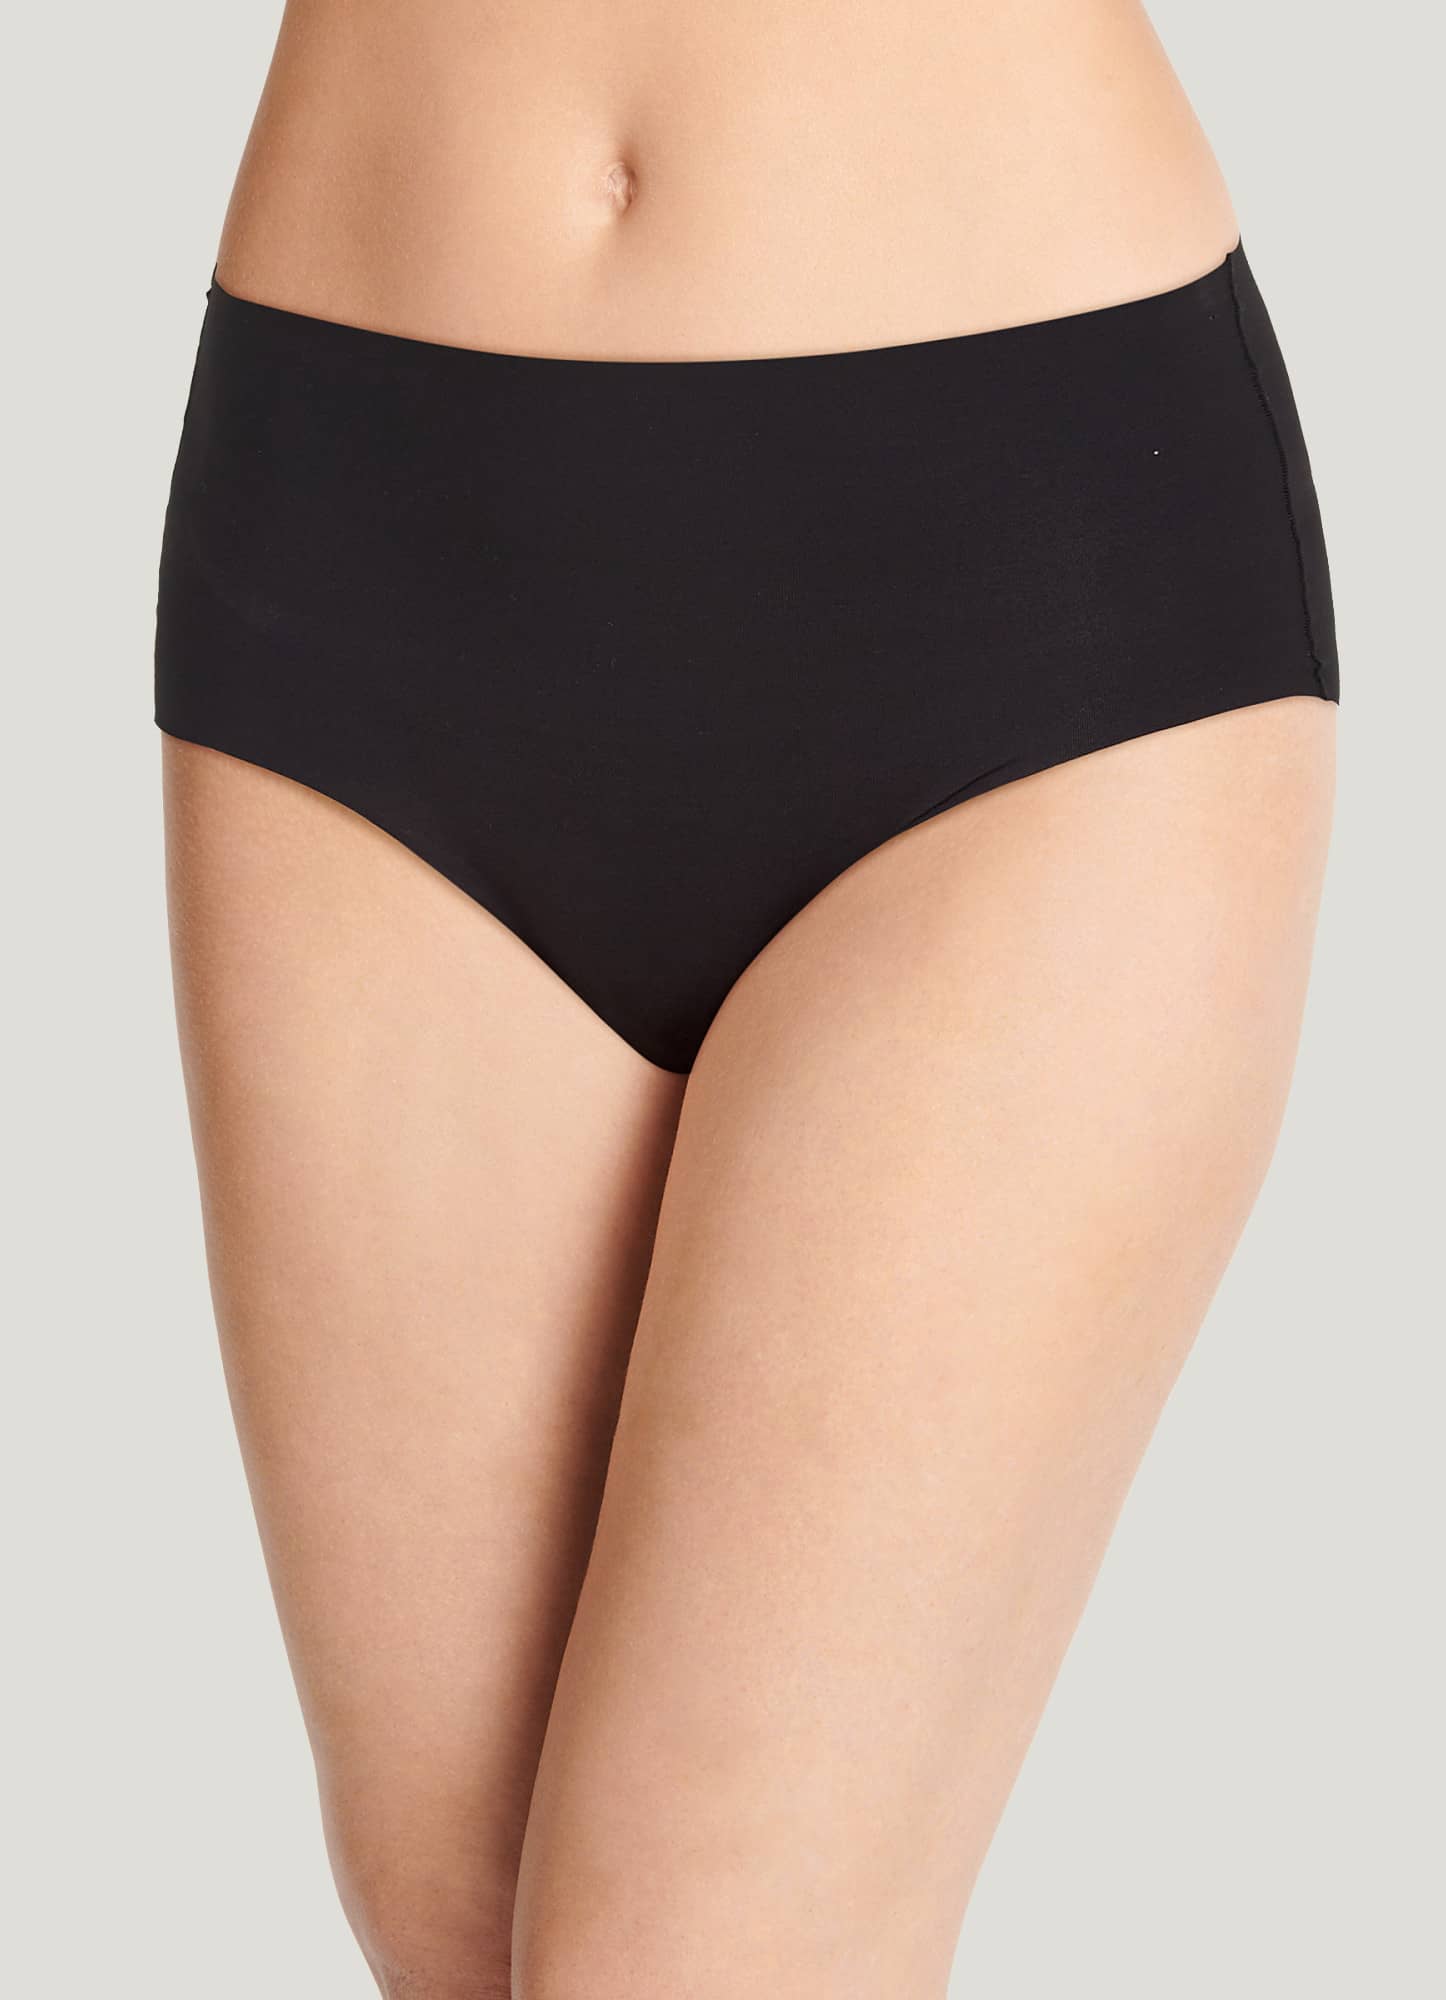 Women's Underwear Microfiber Silicone Edge Hipster Panties XS-3X Plus Size  (3X)